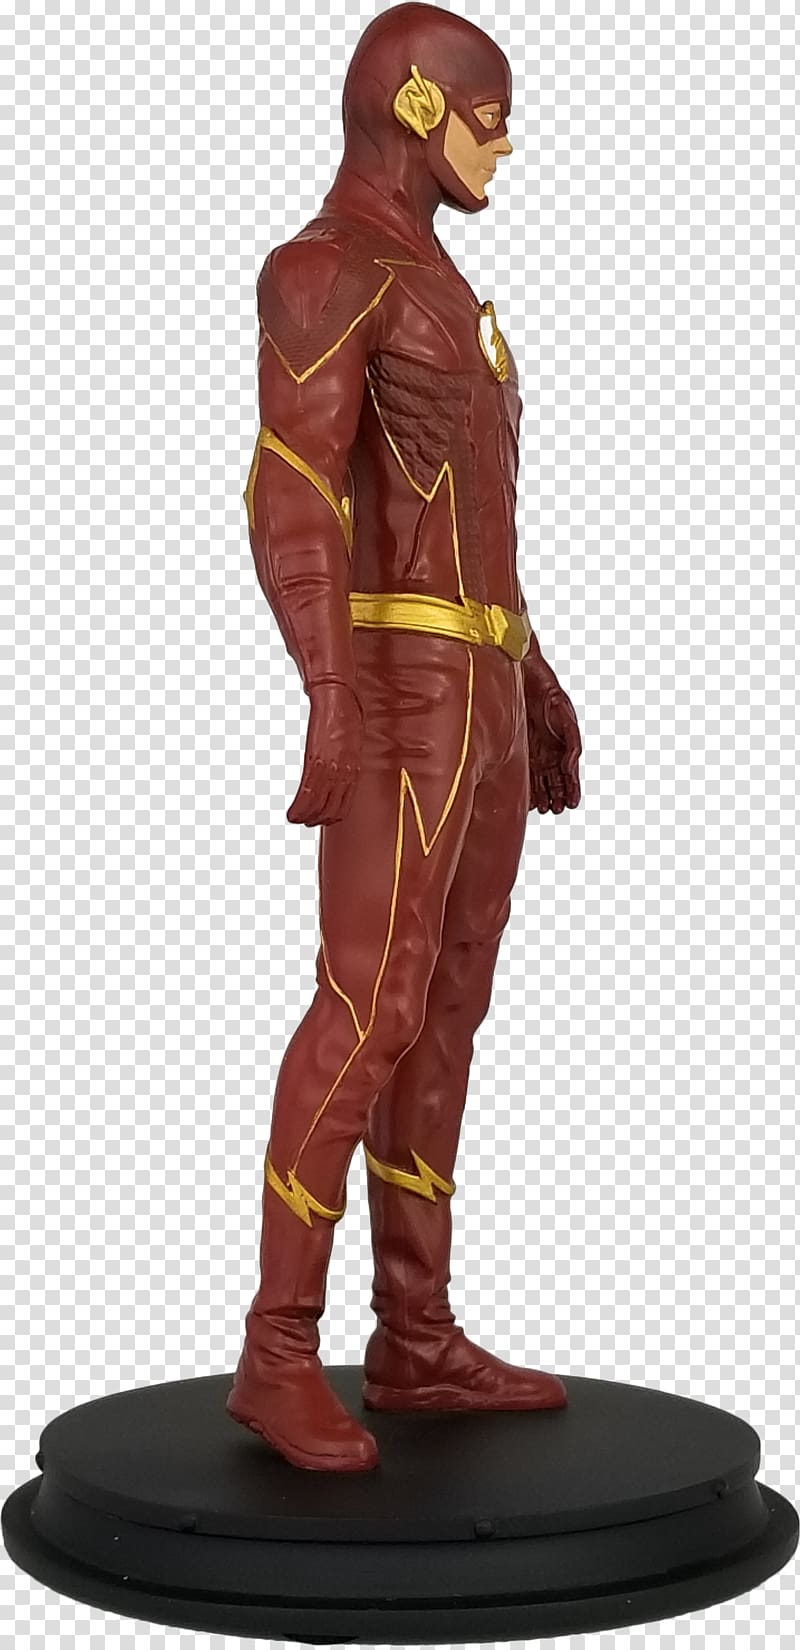 Flash vs. Arrow Deathstroke Captain Cold Figurine, Flash transparent background PNG clipart